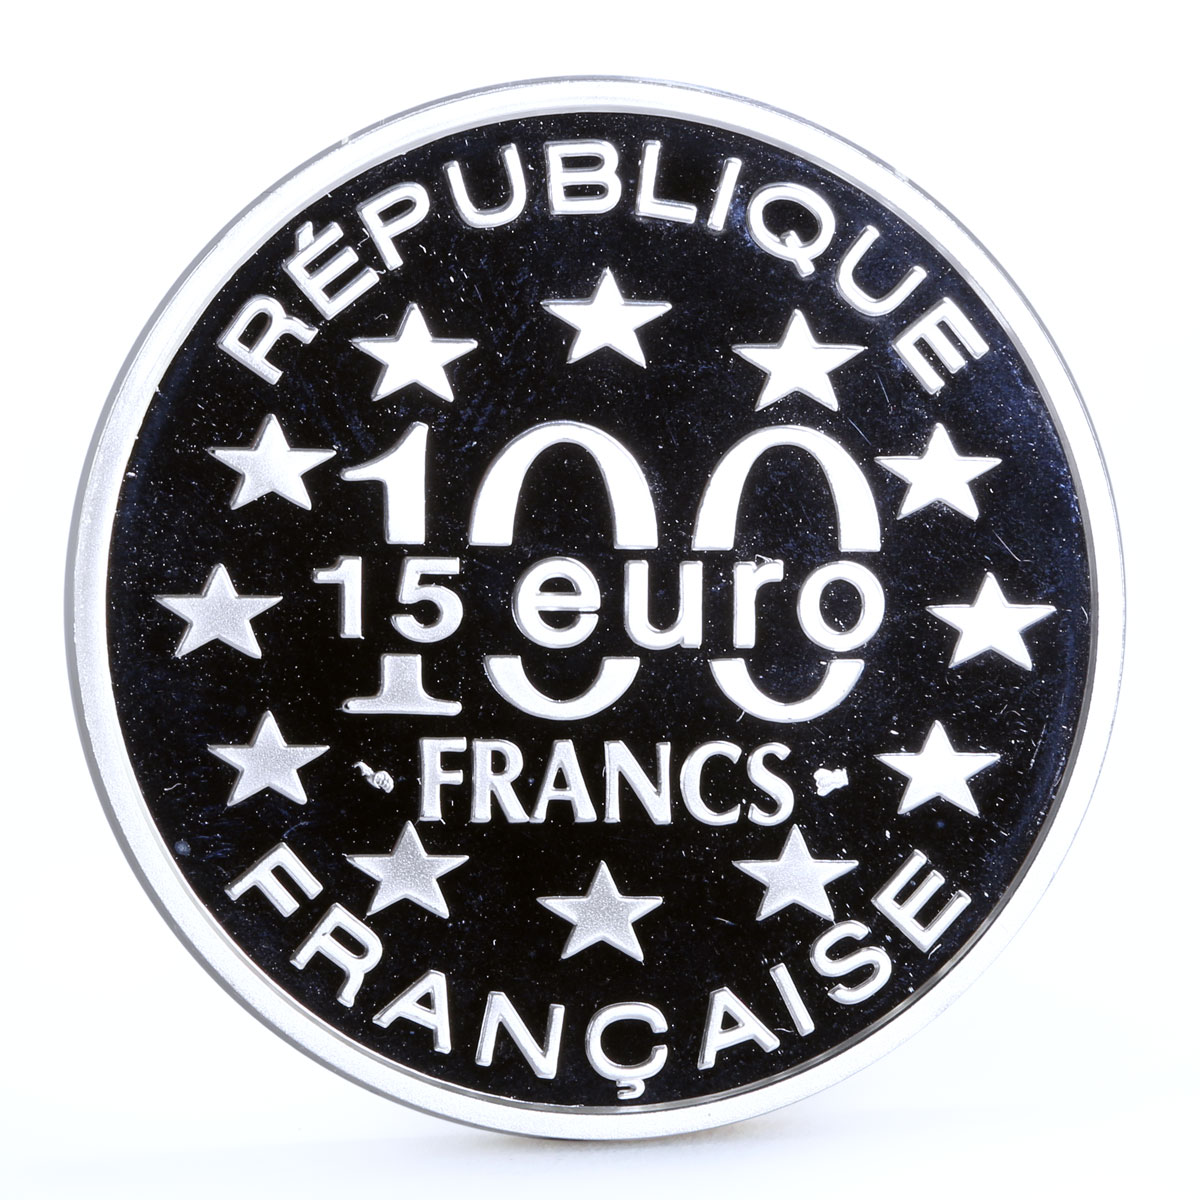 France 100 francs European Heritage Vienna's St. Stephan Church silver coin 1996